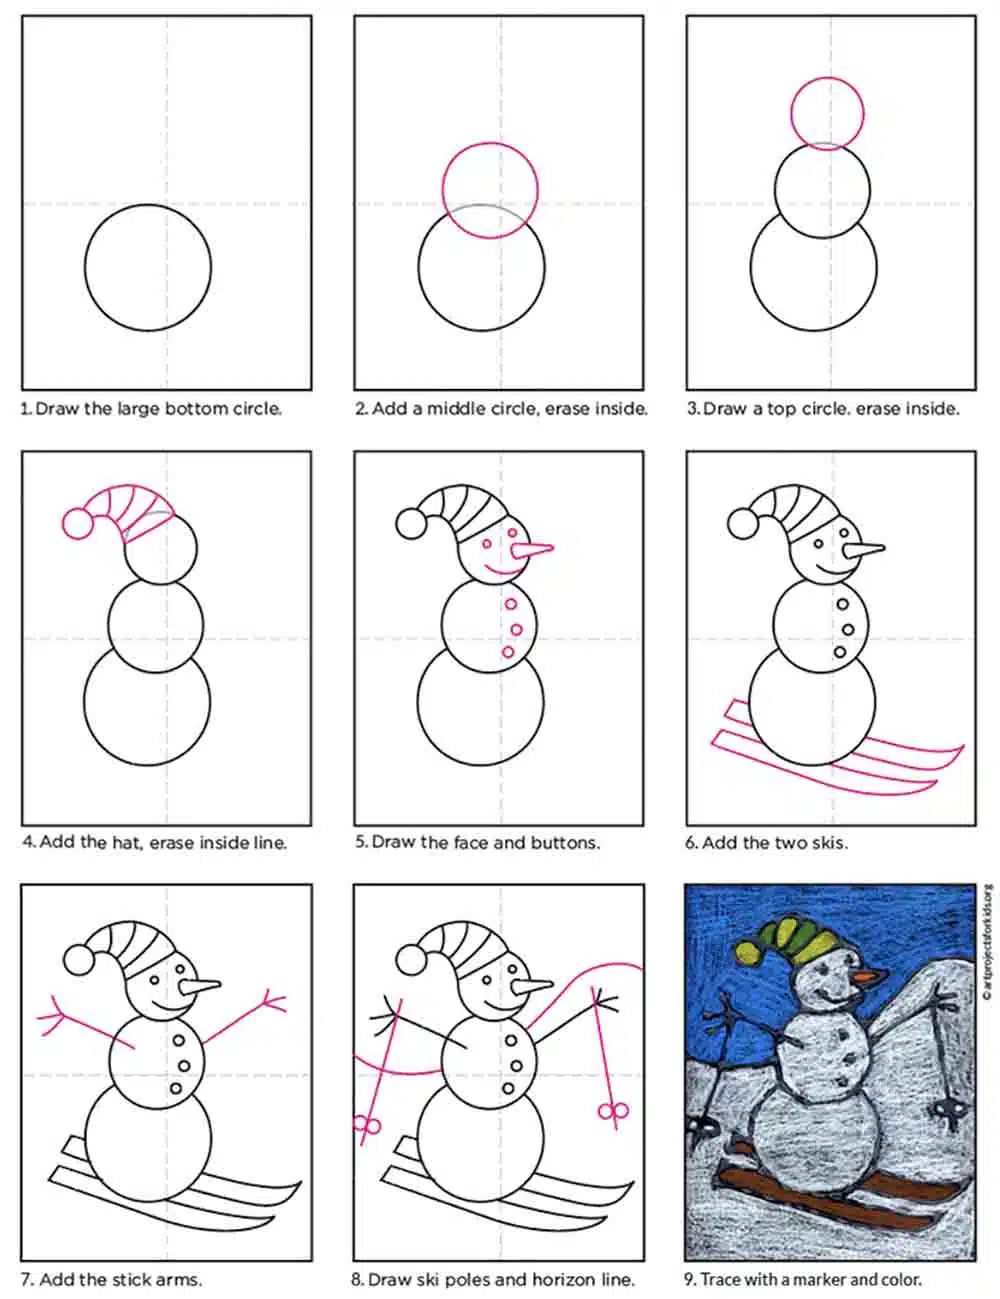 Plus-Plus: Snowman Instructions Step By Step ⛄ 